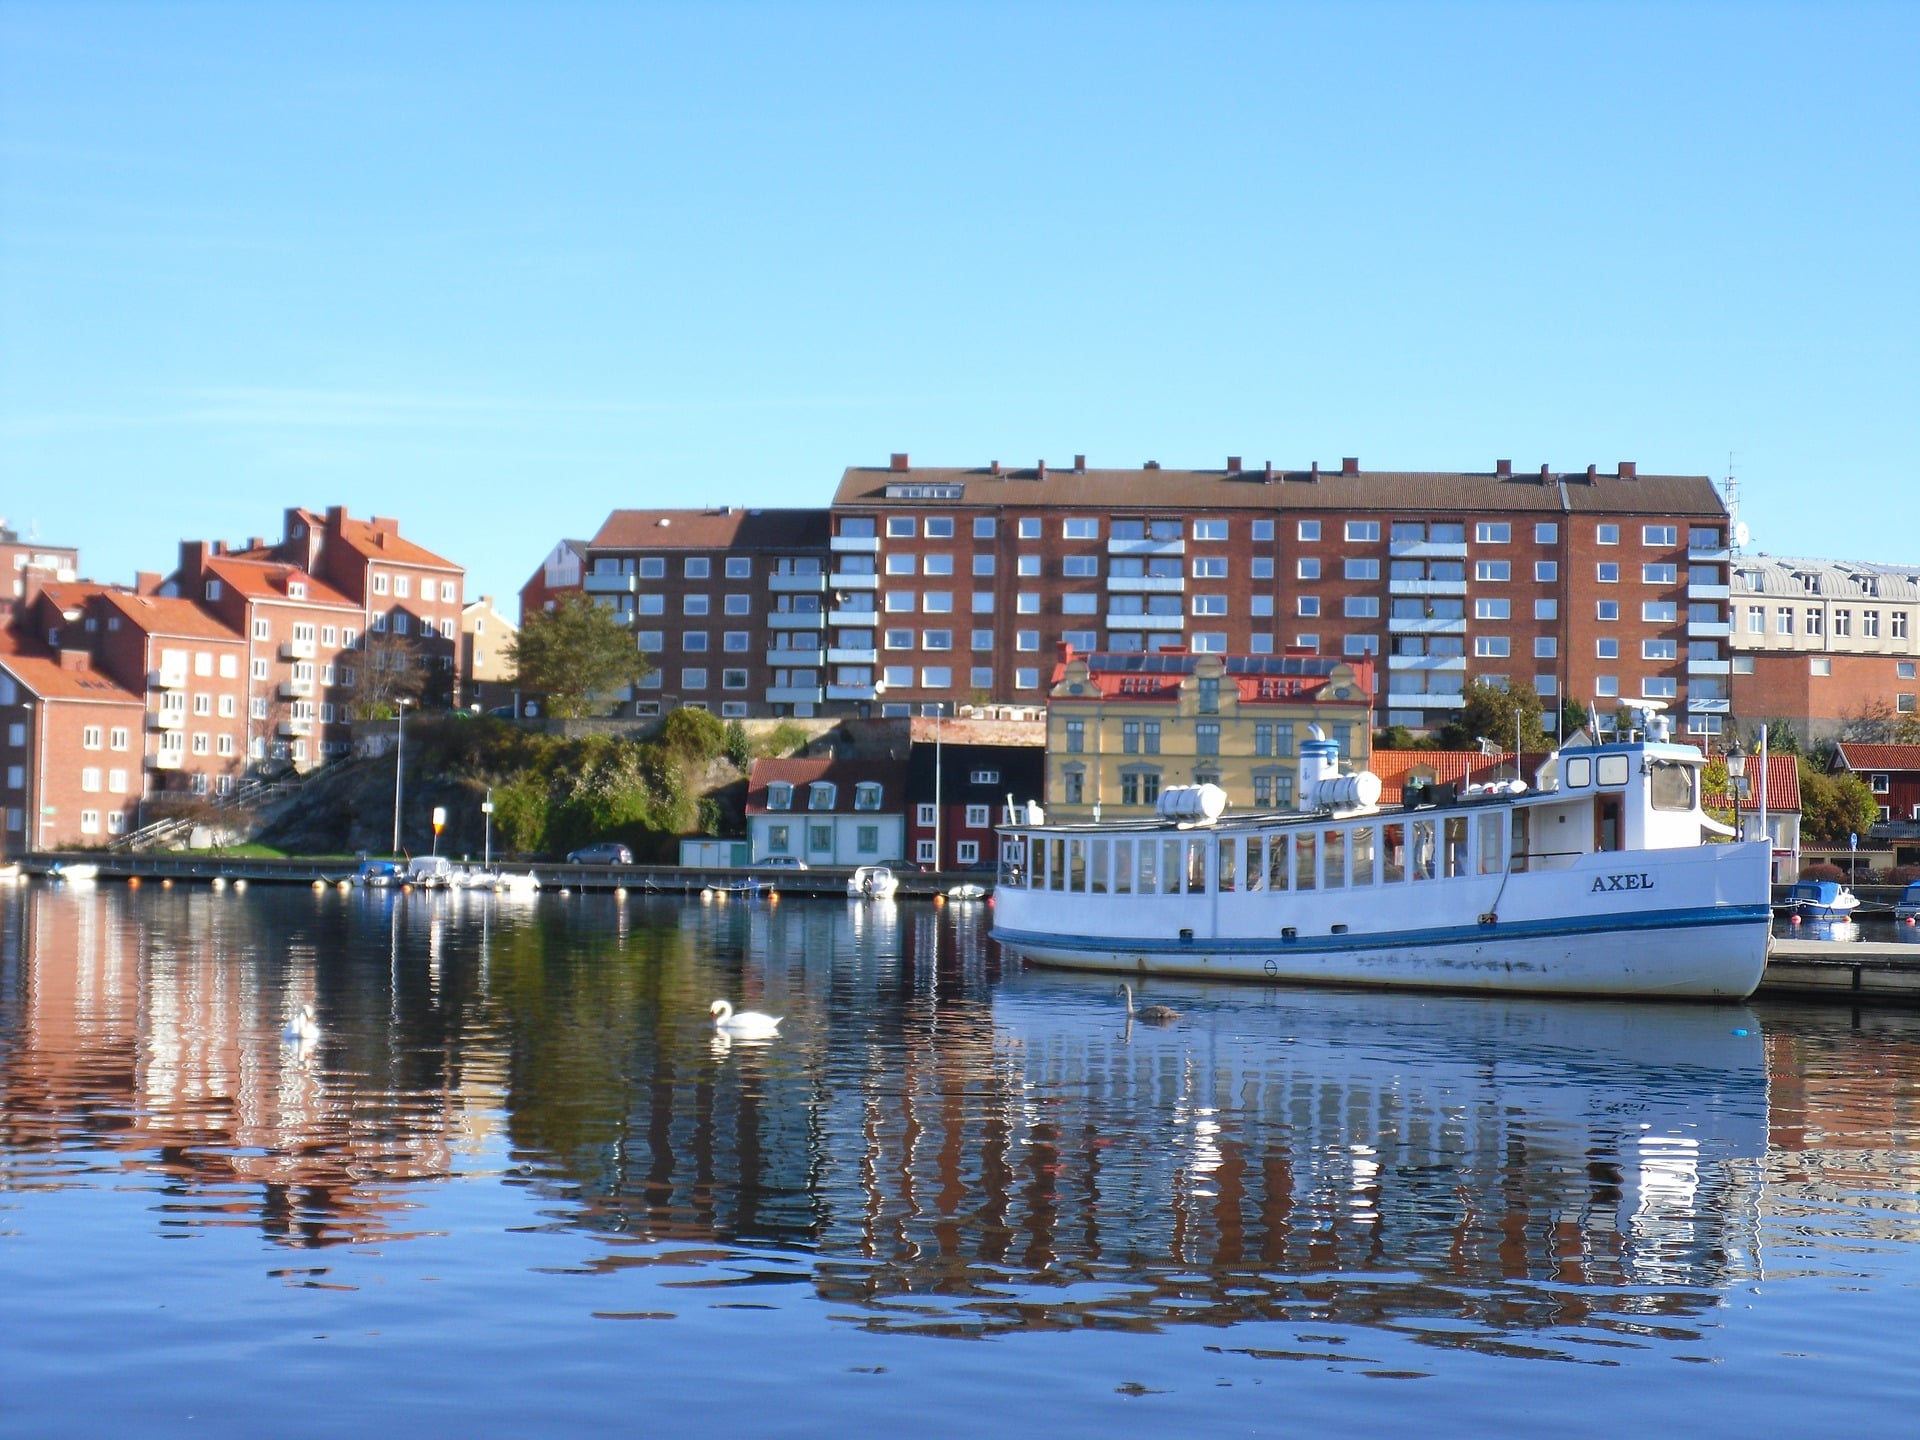 Karlskrona – Blekinge nagy kikötője